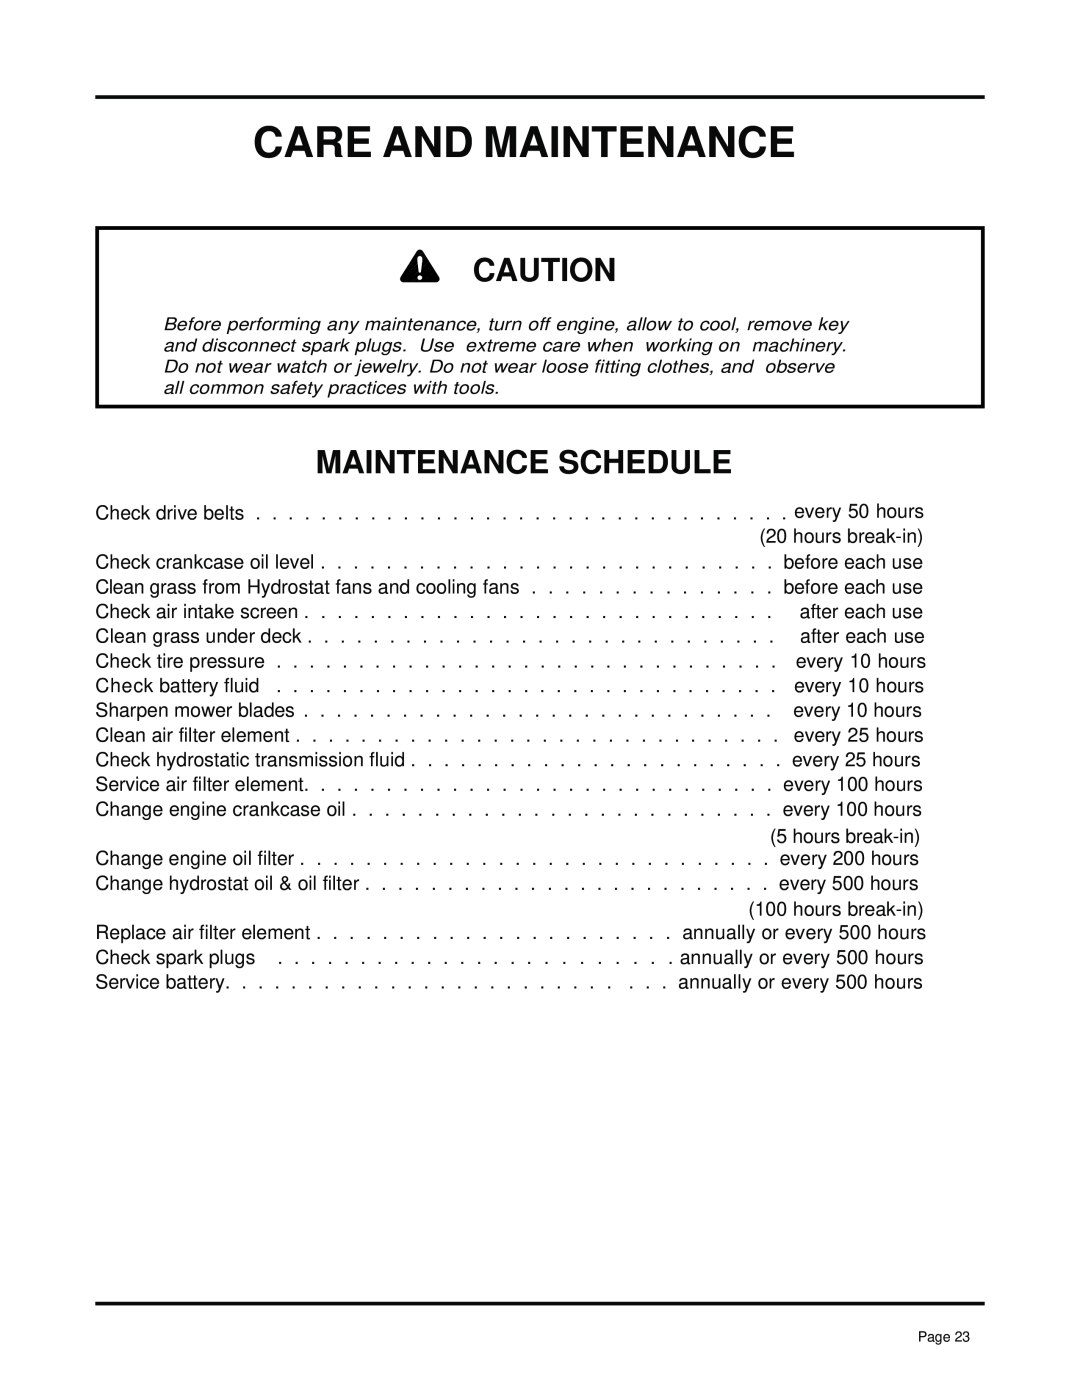 Dixon 13091-0500, ZTR 7025 manual Care And Maintenance, Maintenance Schedule 